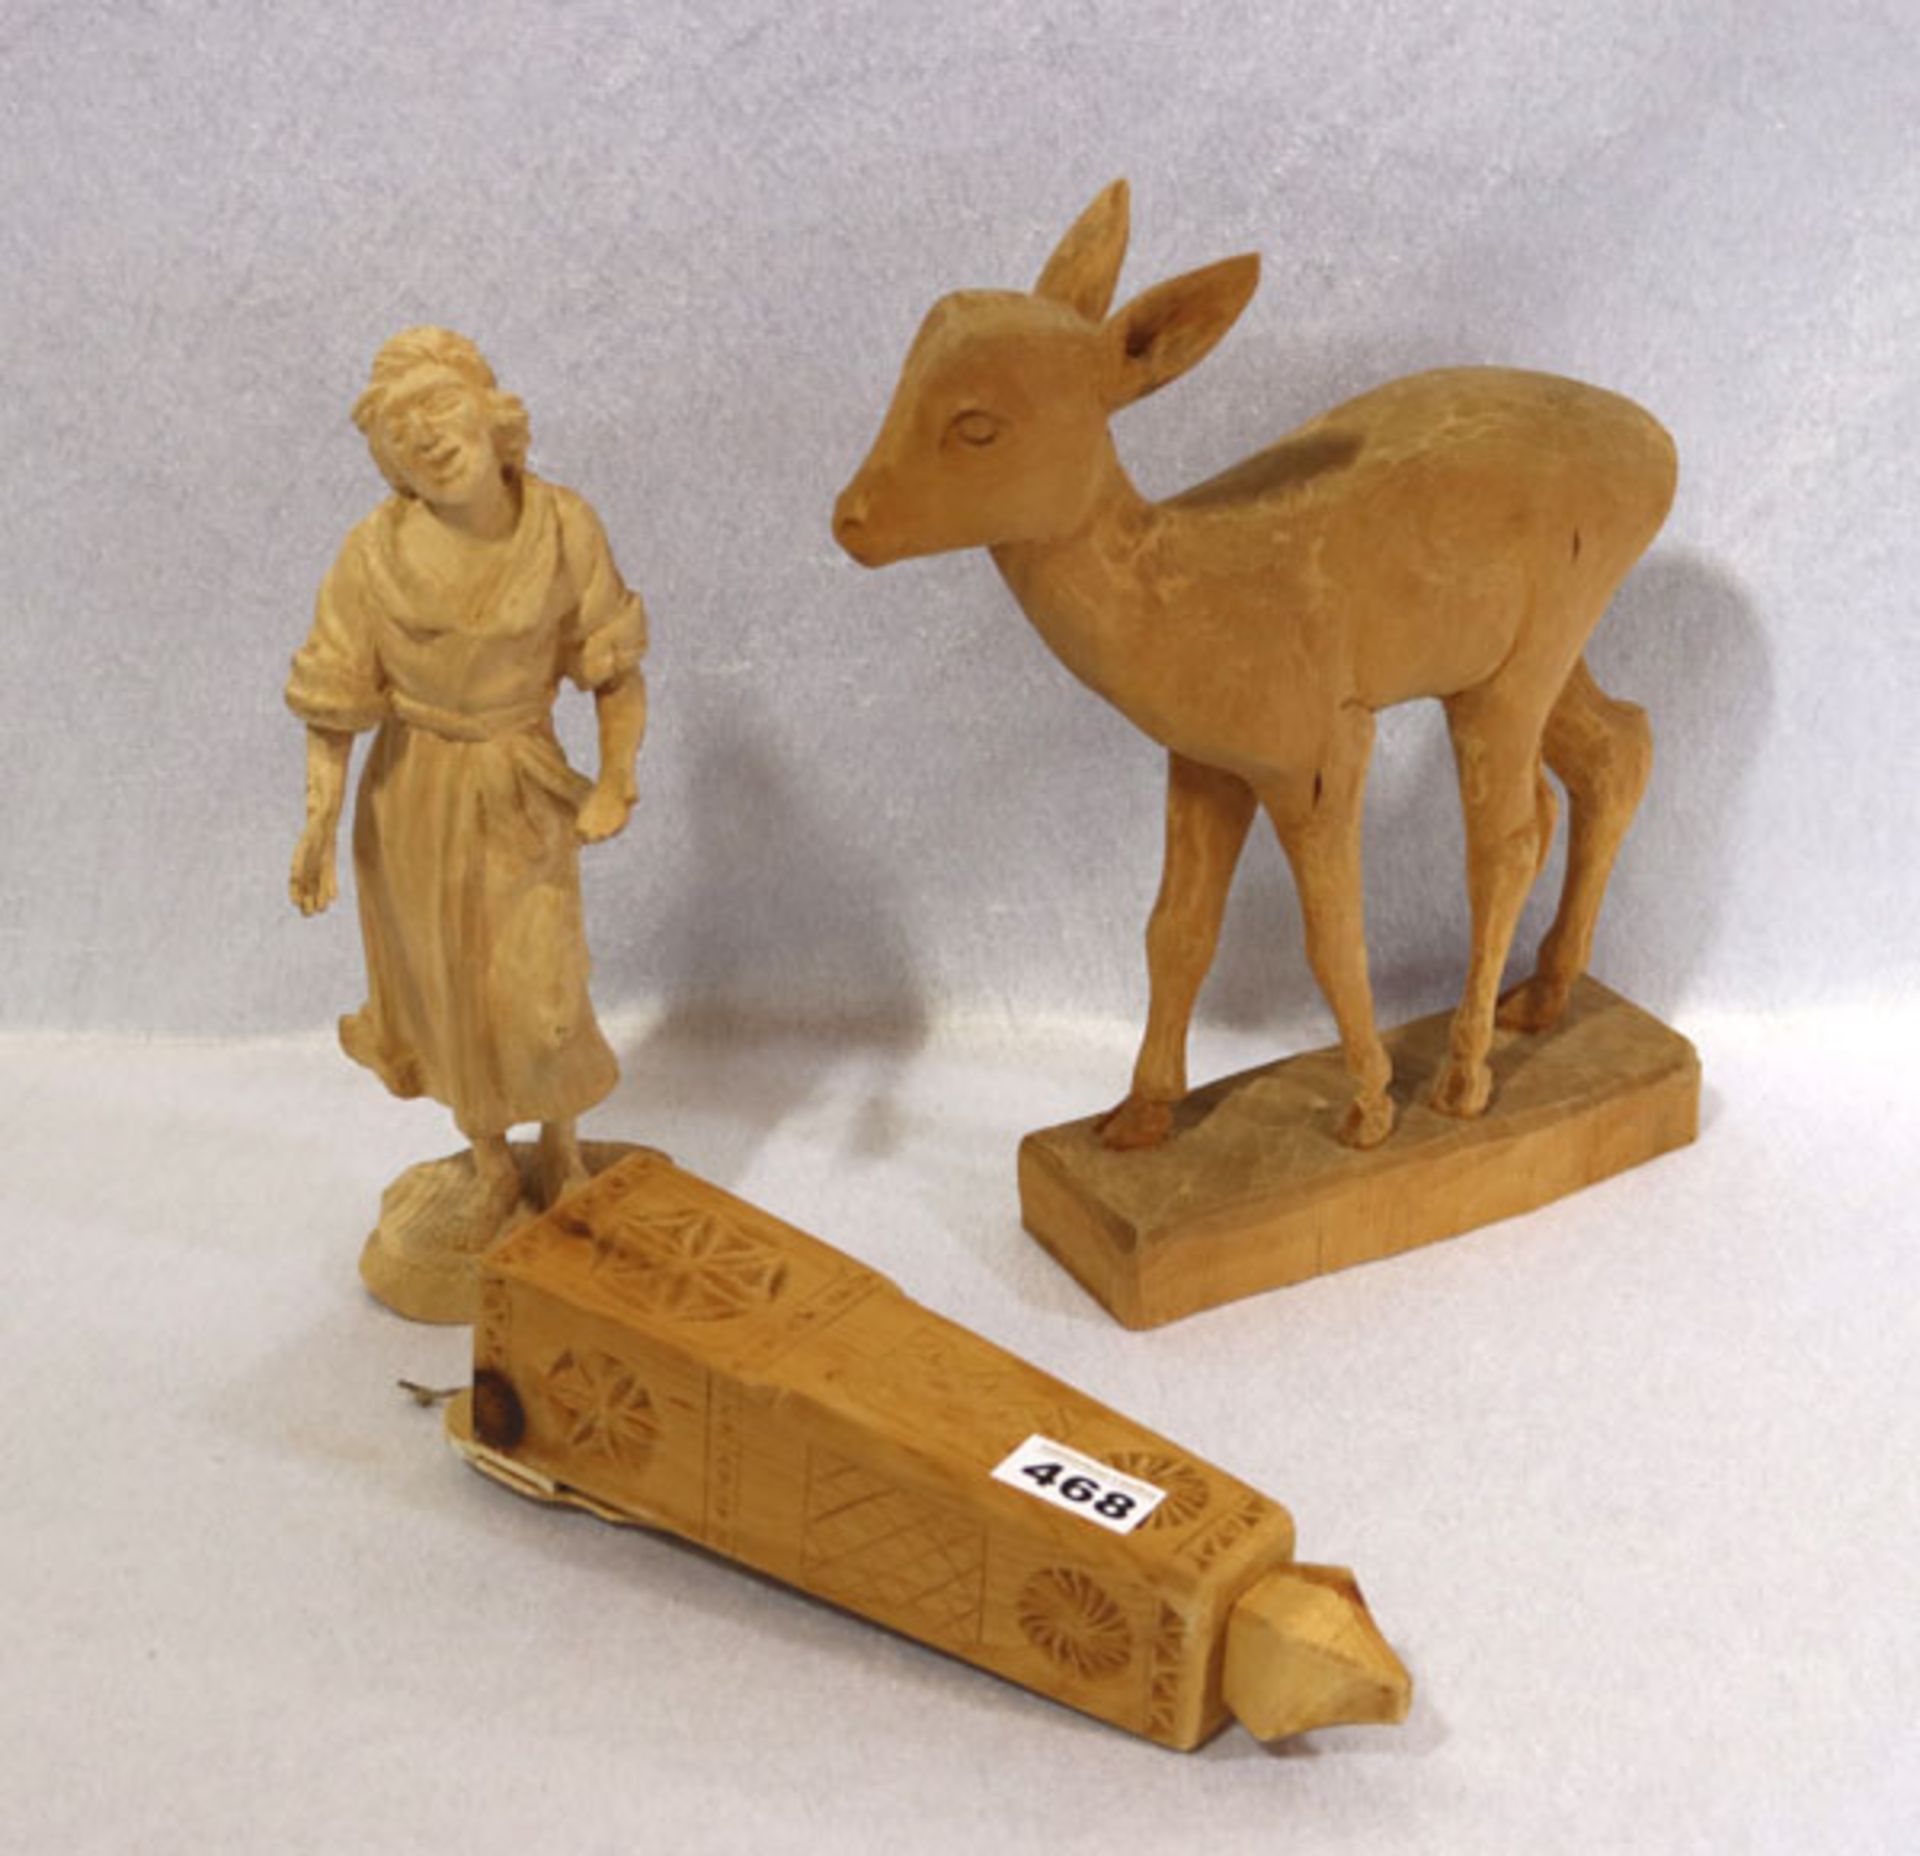 Konvolut: Holzfiguren Fräslinge 'Reh', H 31 cm, 'Frau', H 29 cm, und Holz Zierkumpf, H 28 cm